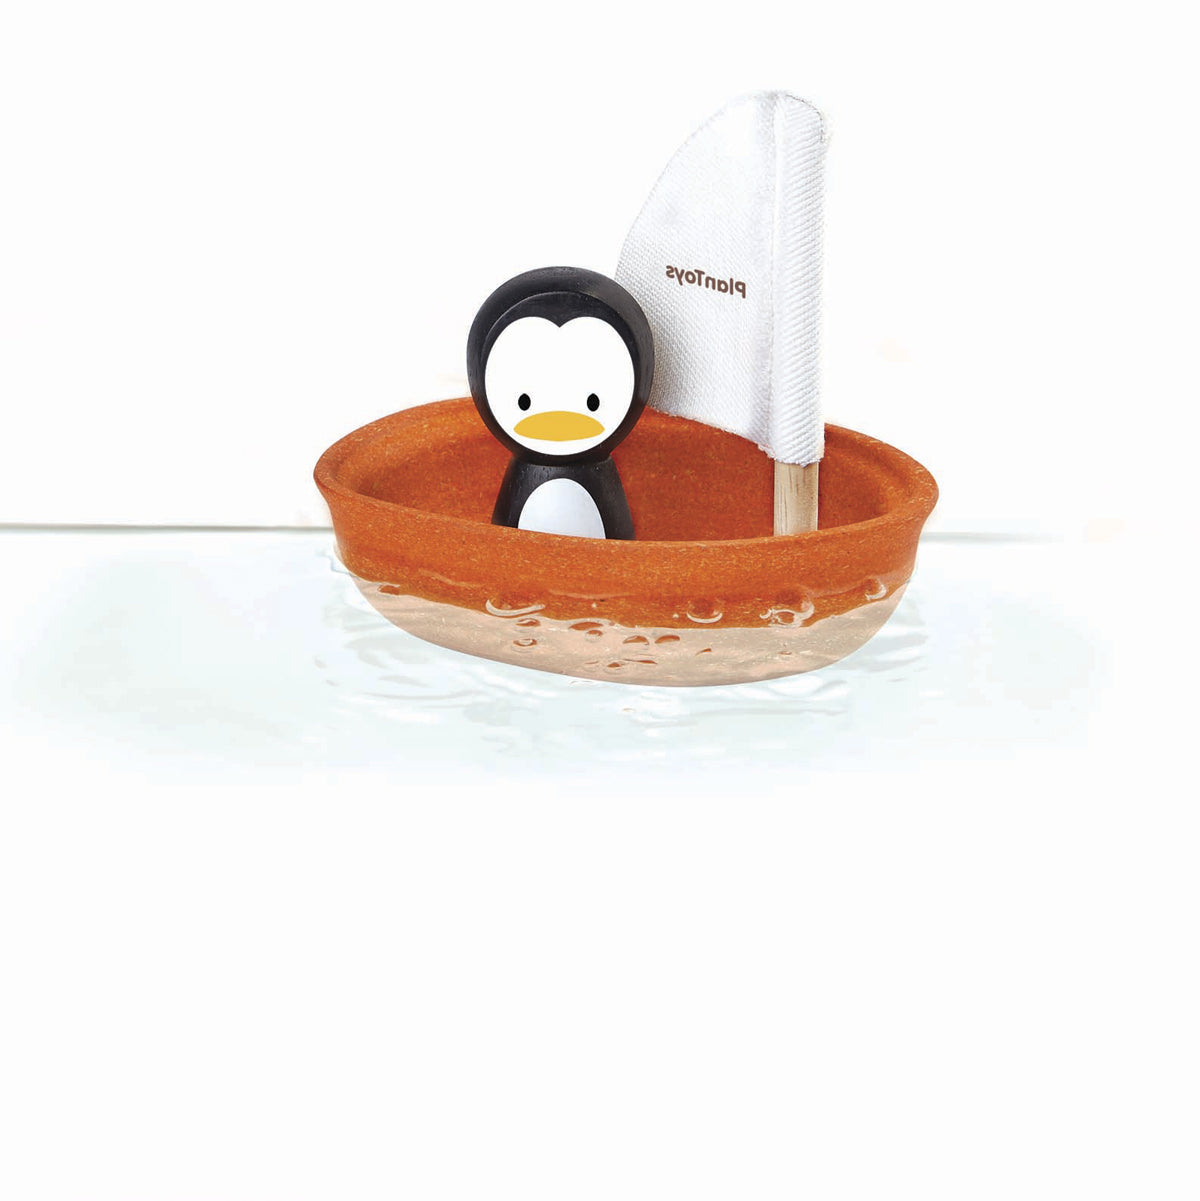 Plan Toys Sailing boat Penguin Orange natural rubber wood bath toy